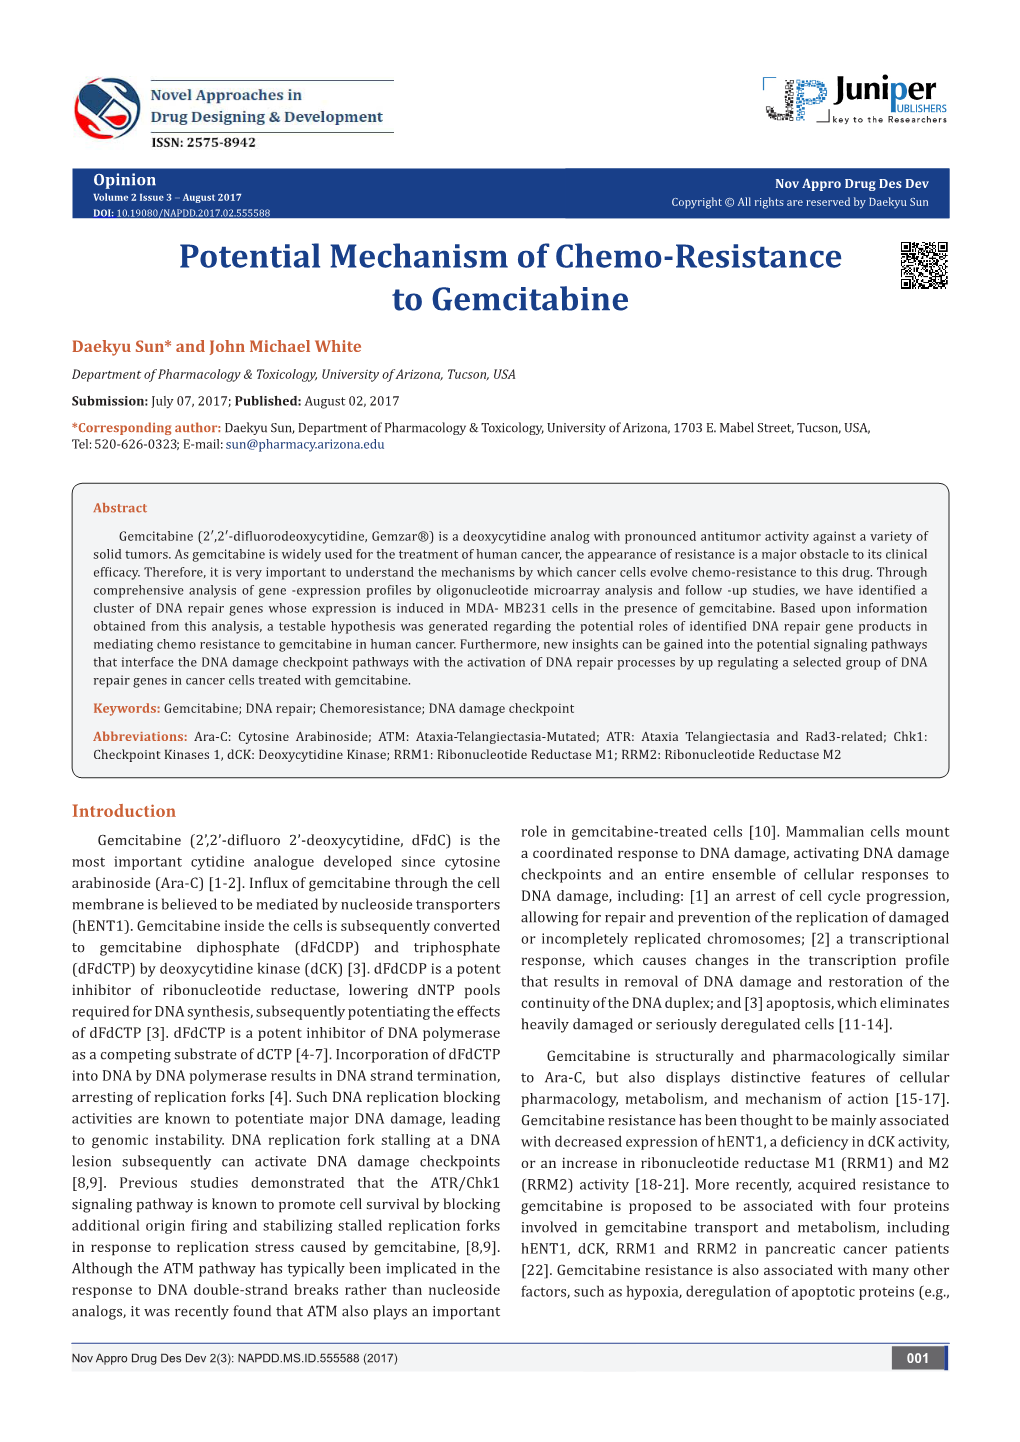 Potential Mechanism of Chemo-Resistance to Gemcitabine